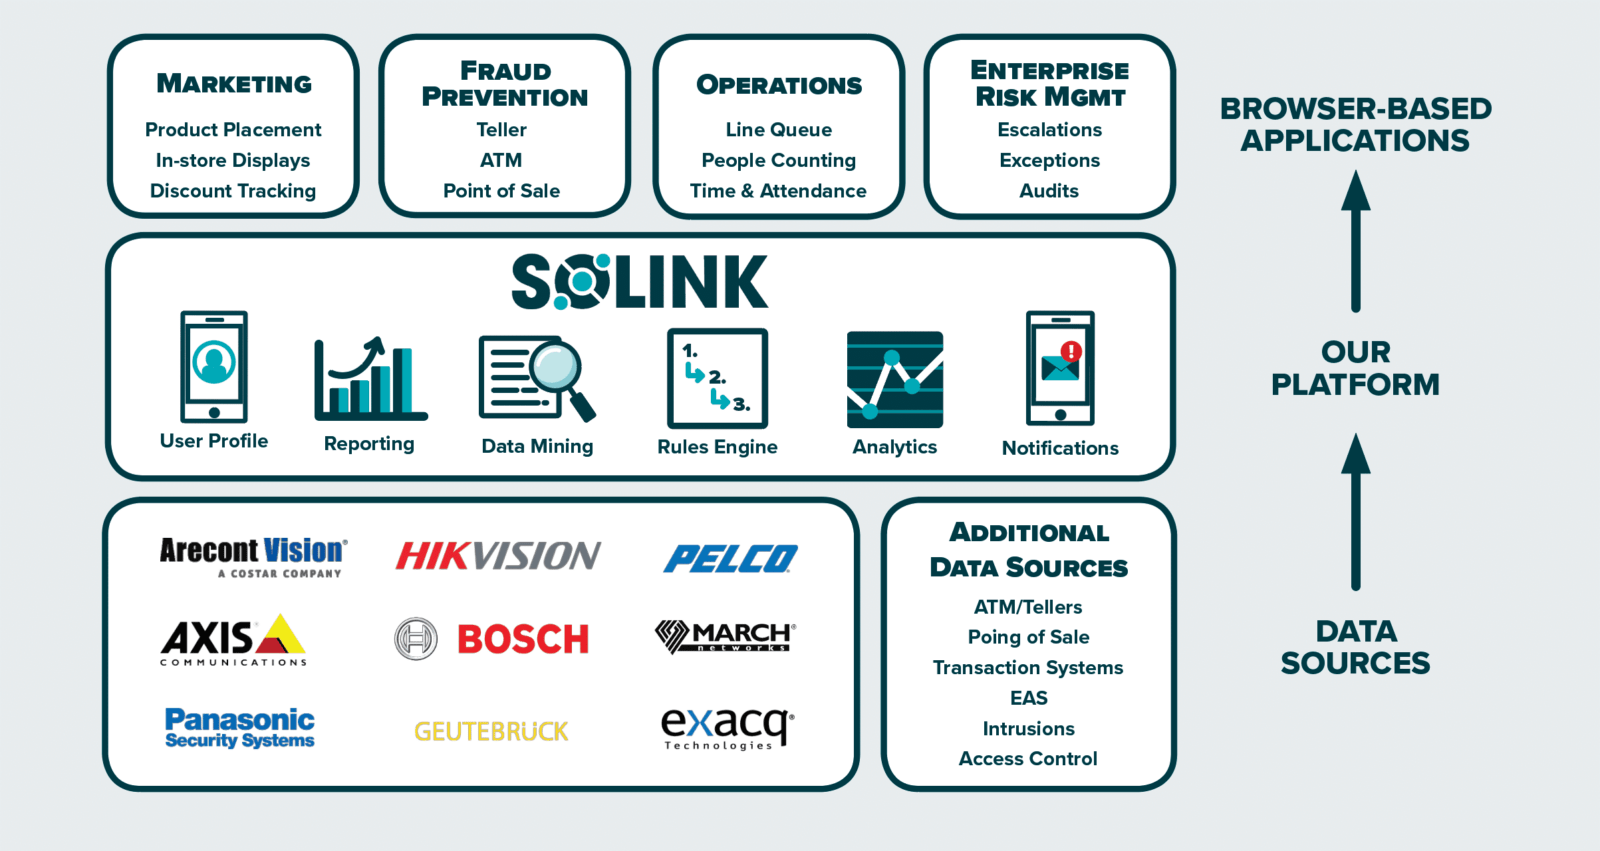 Solink platform features.